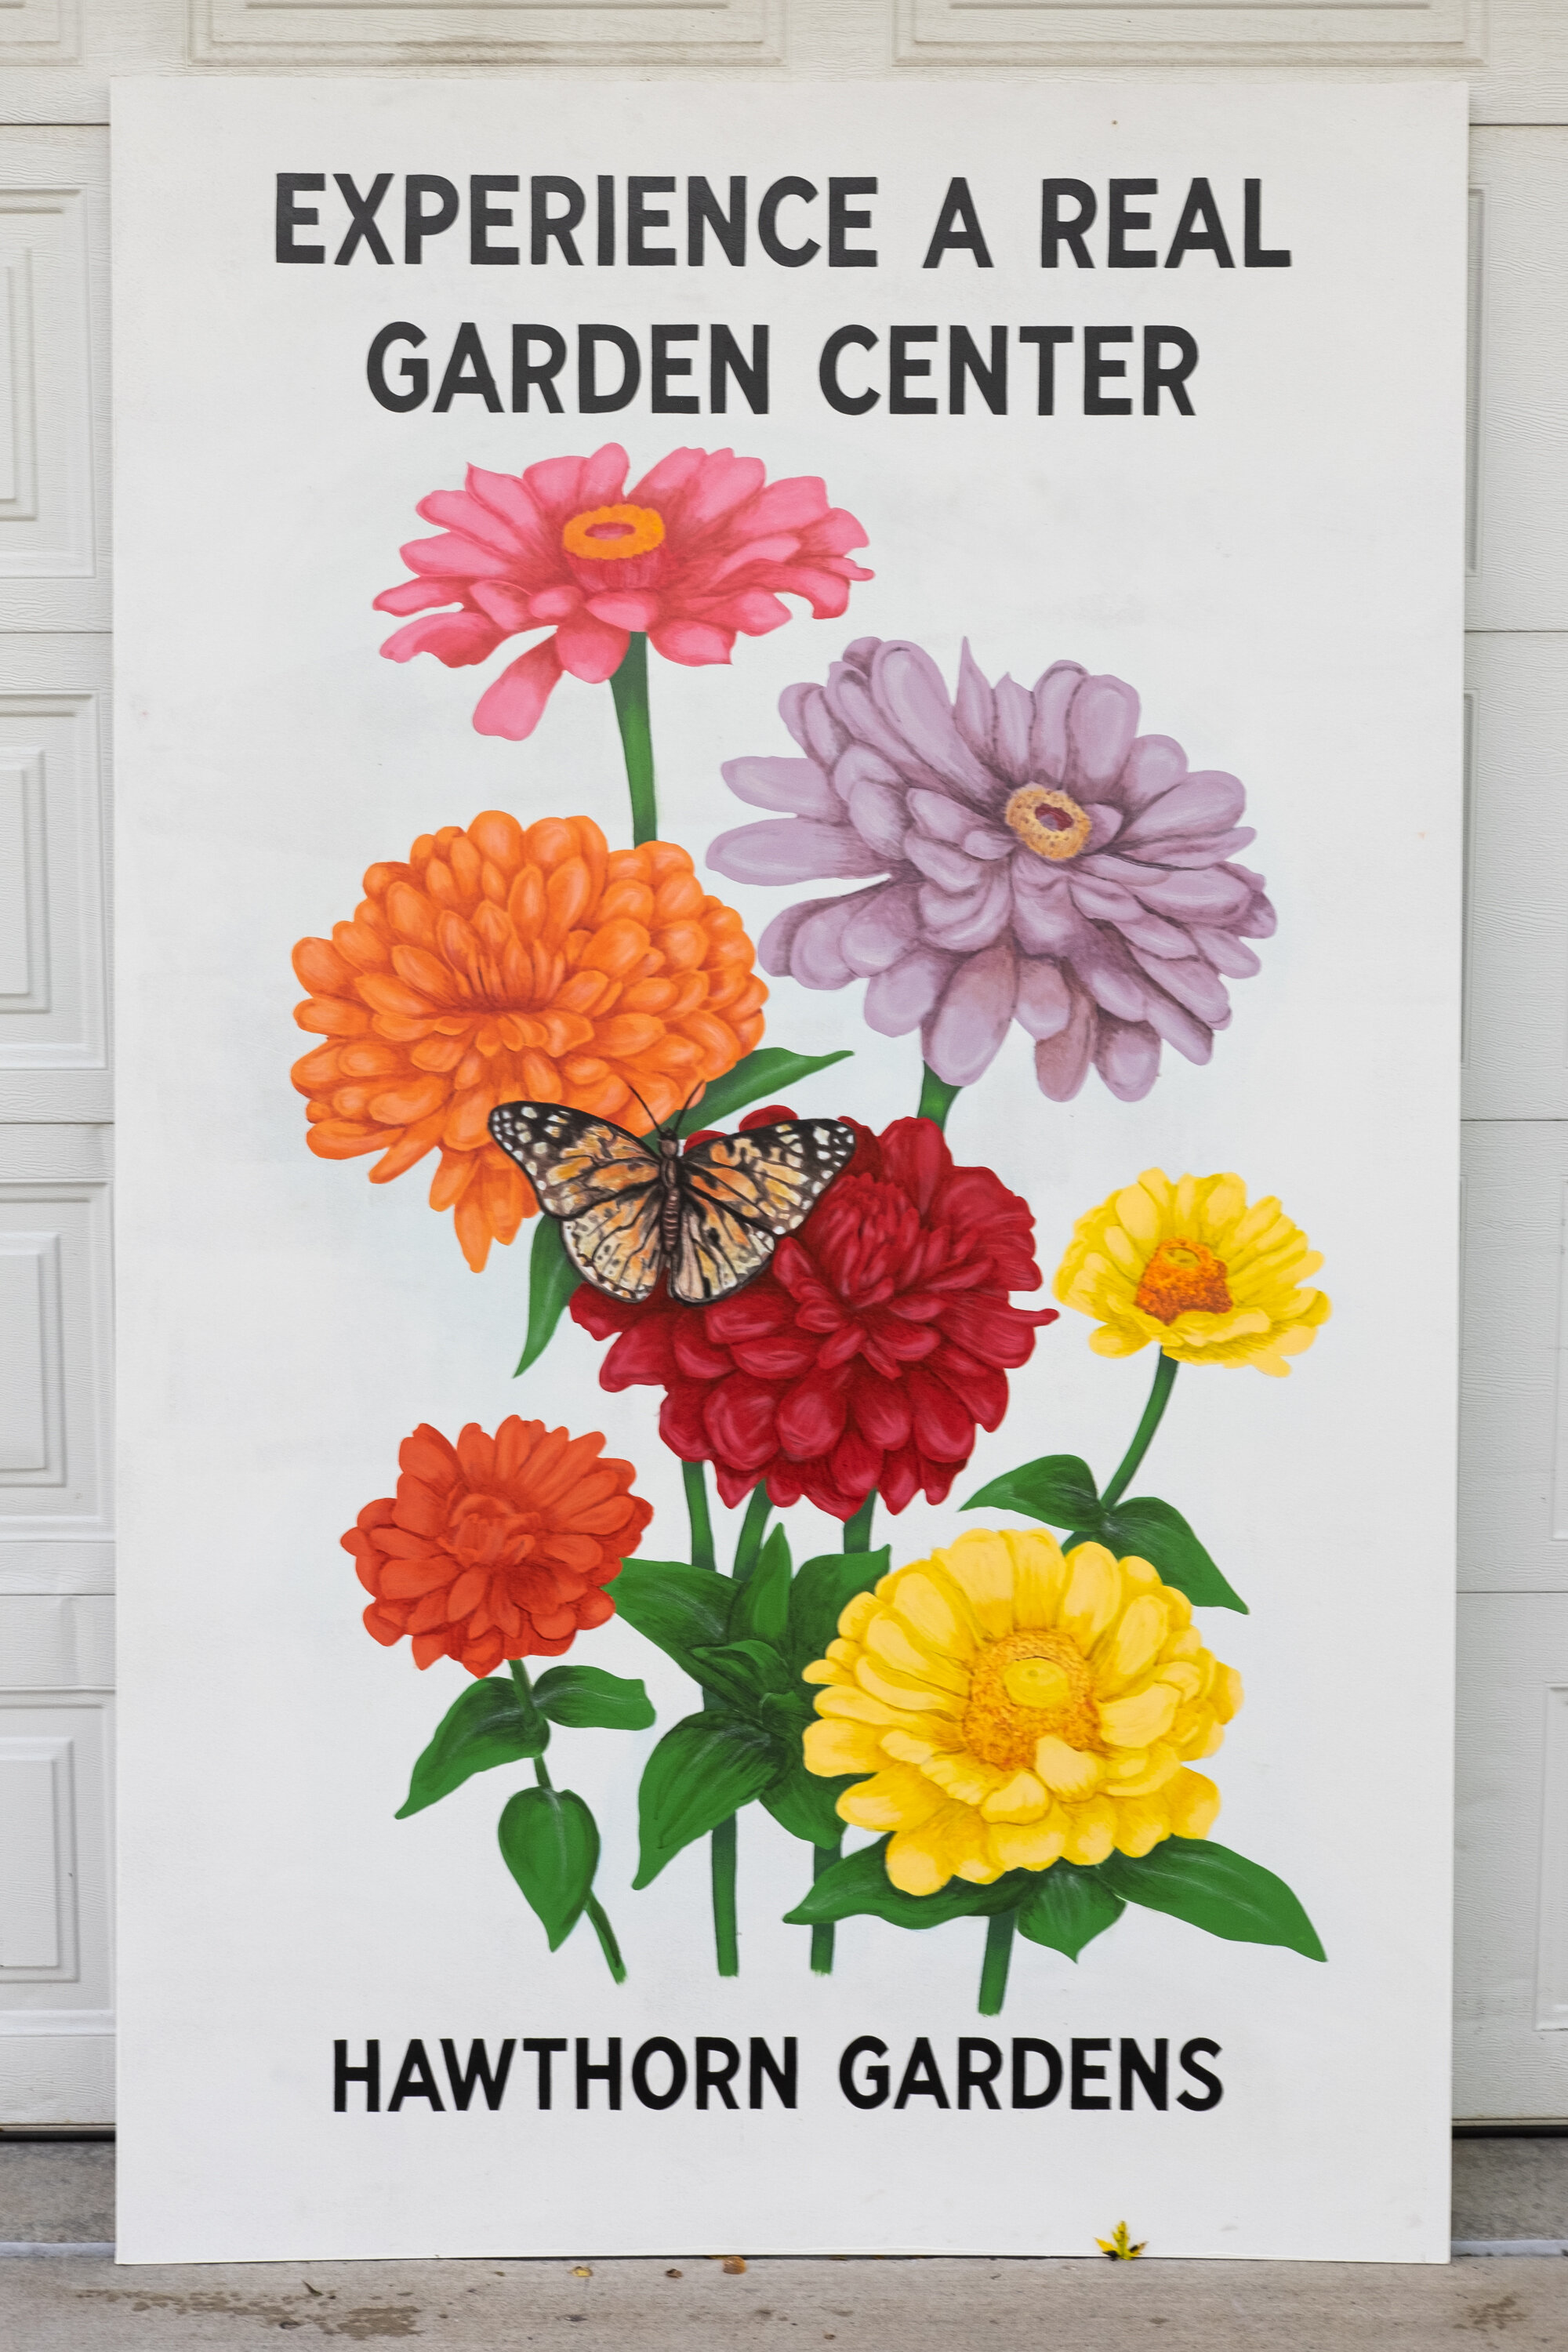 Handpainted mural signage for Garden Center